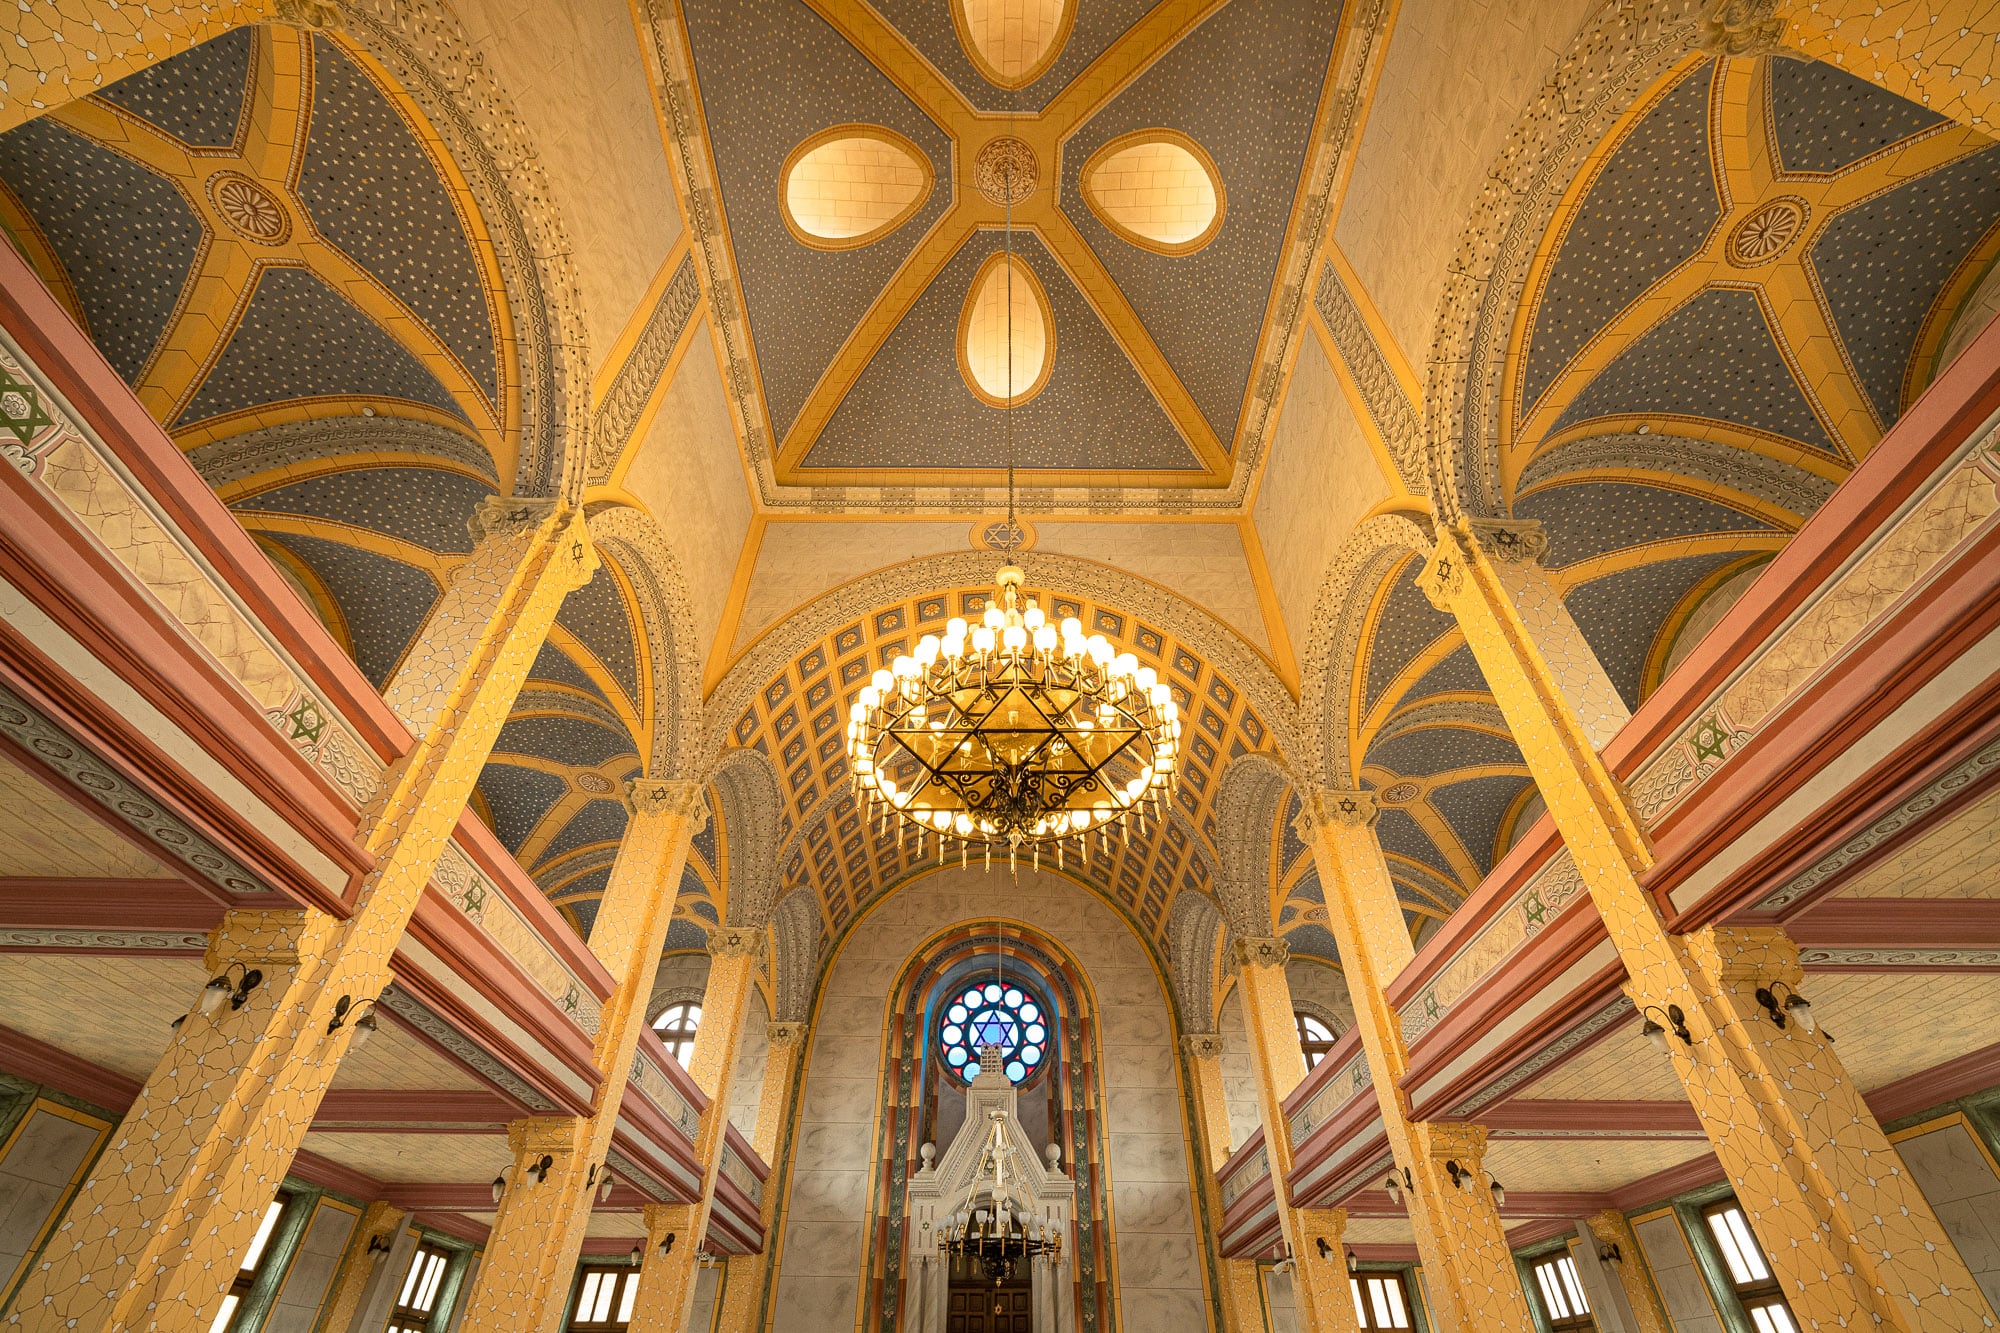 inside the grand synagogue of Edirne